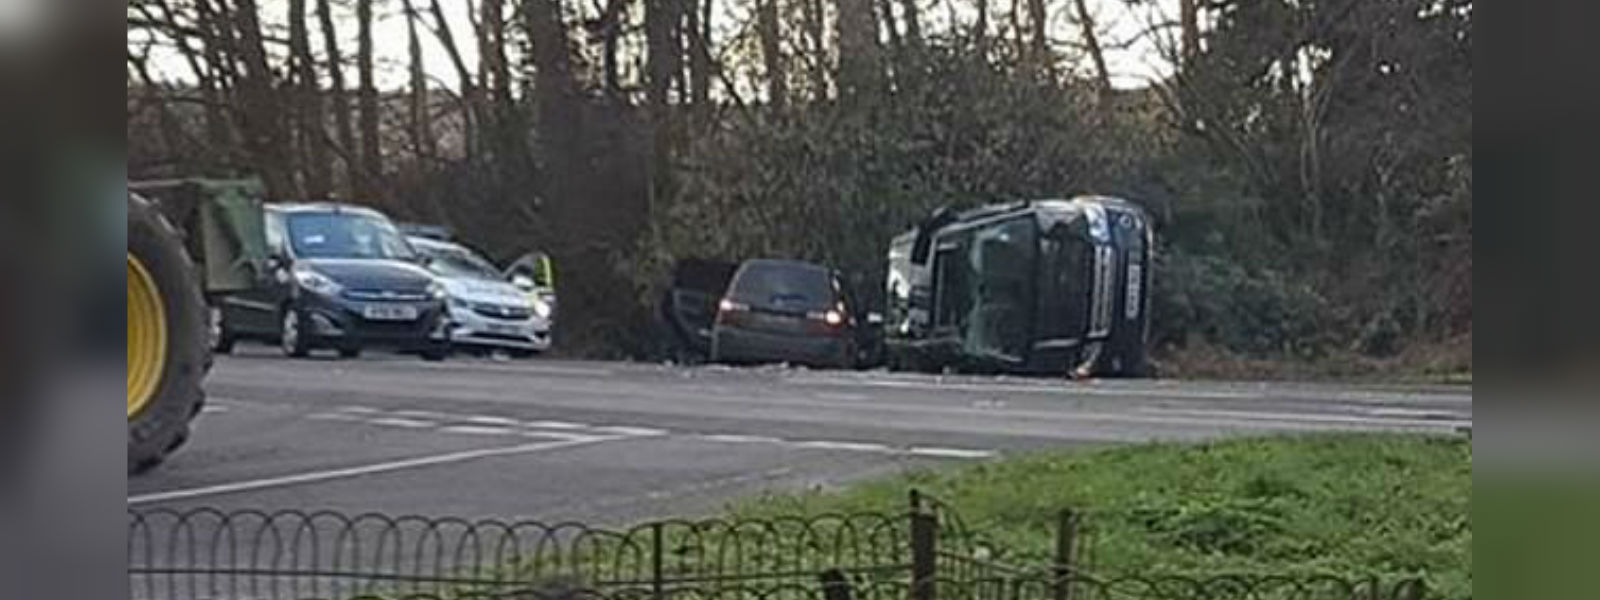 Prince Philip escaped uninjured in the car crash